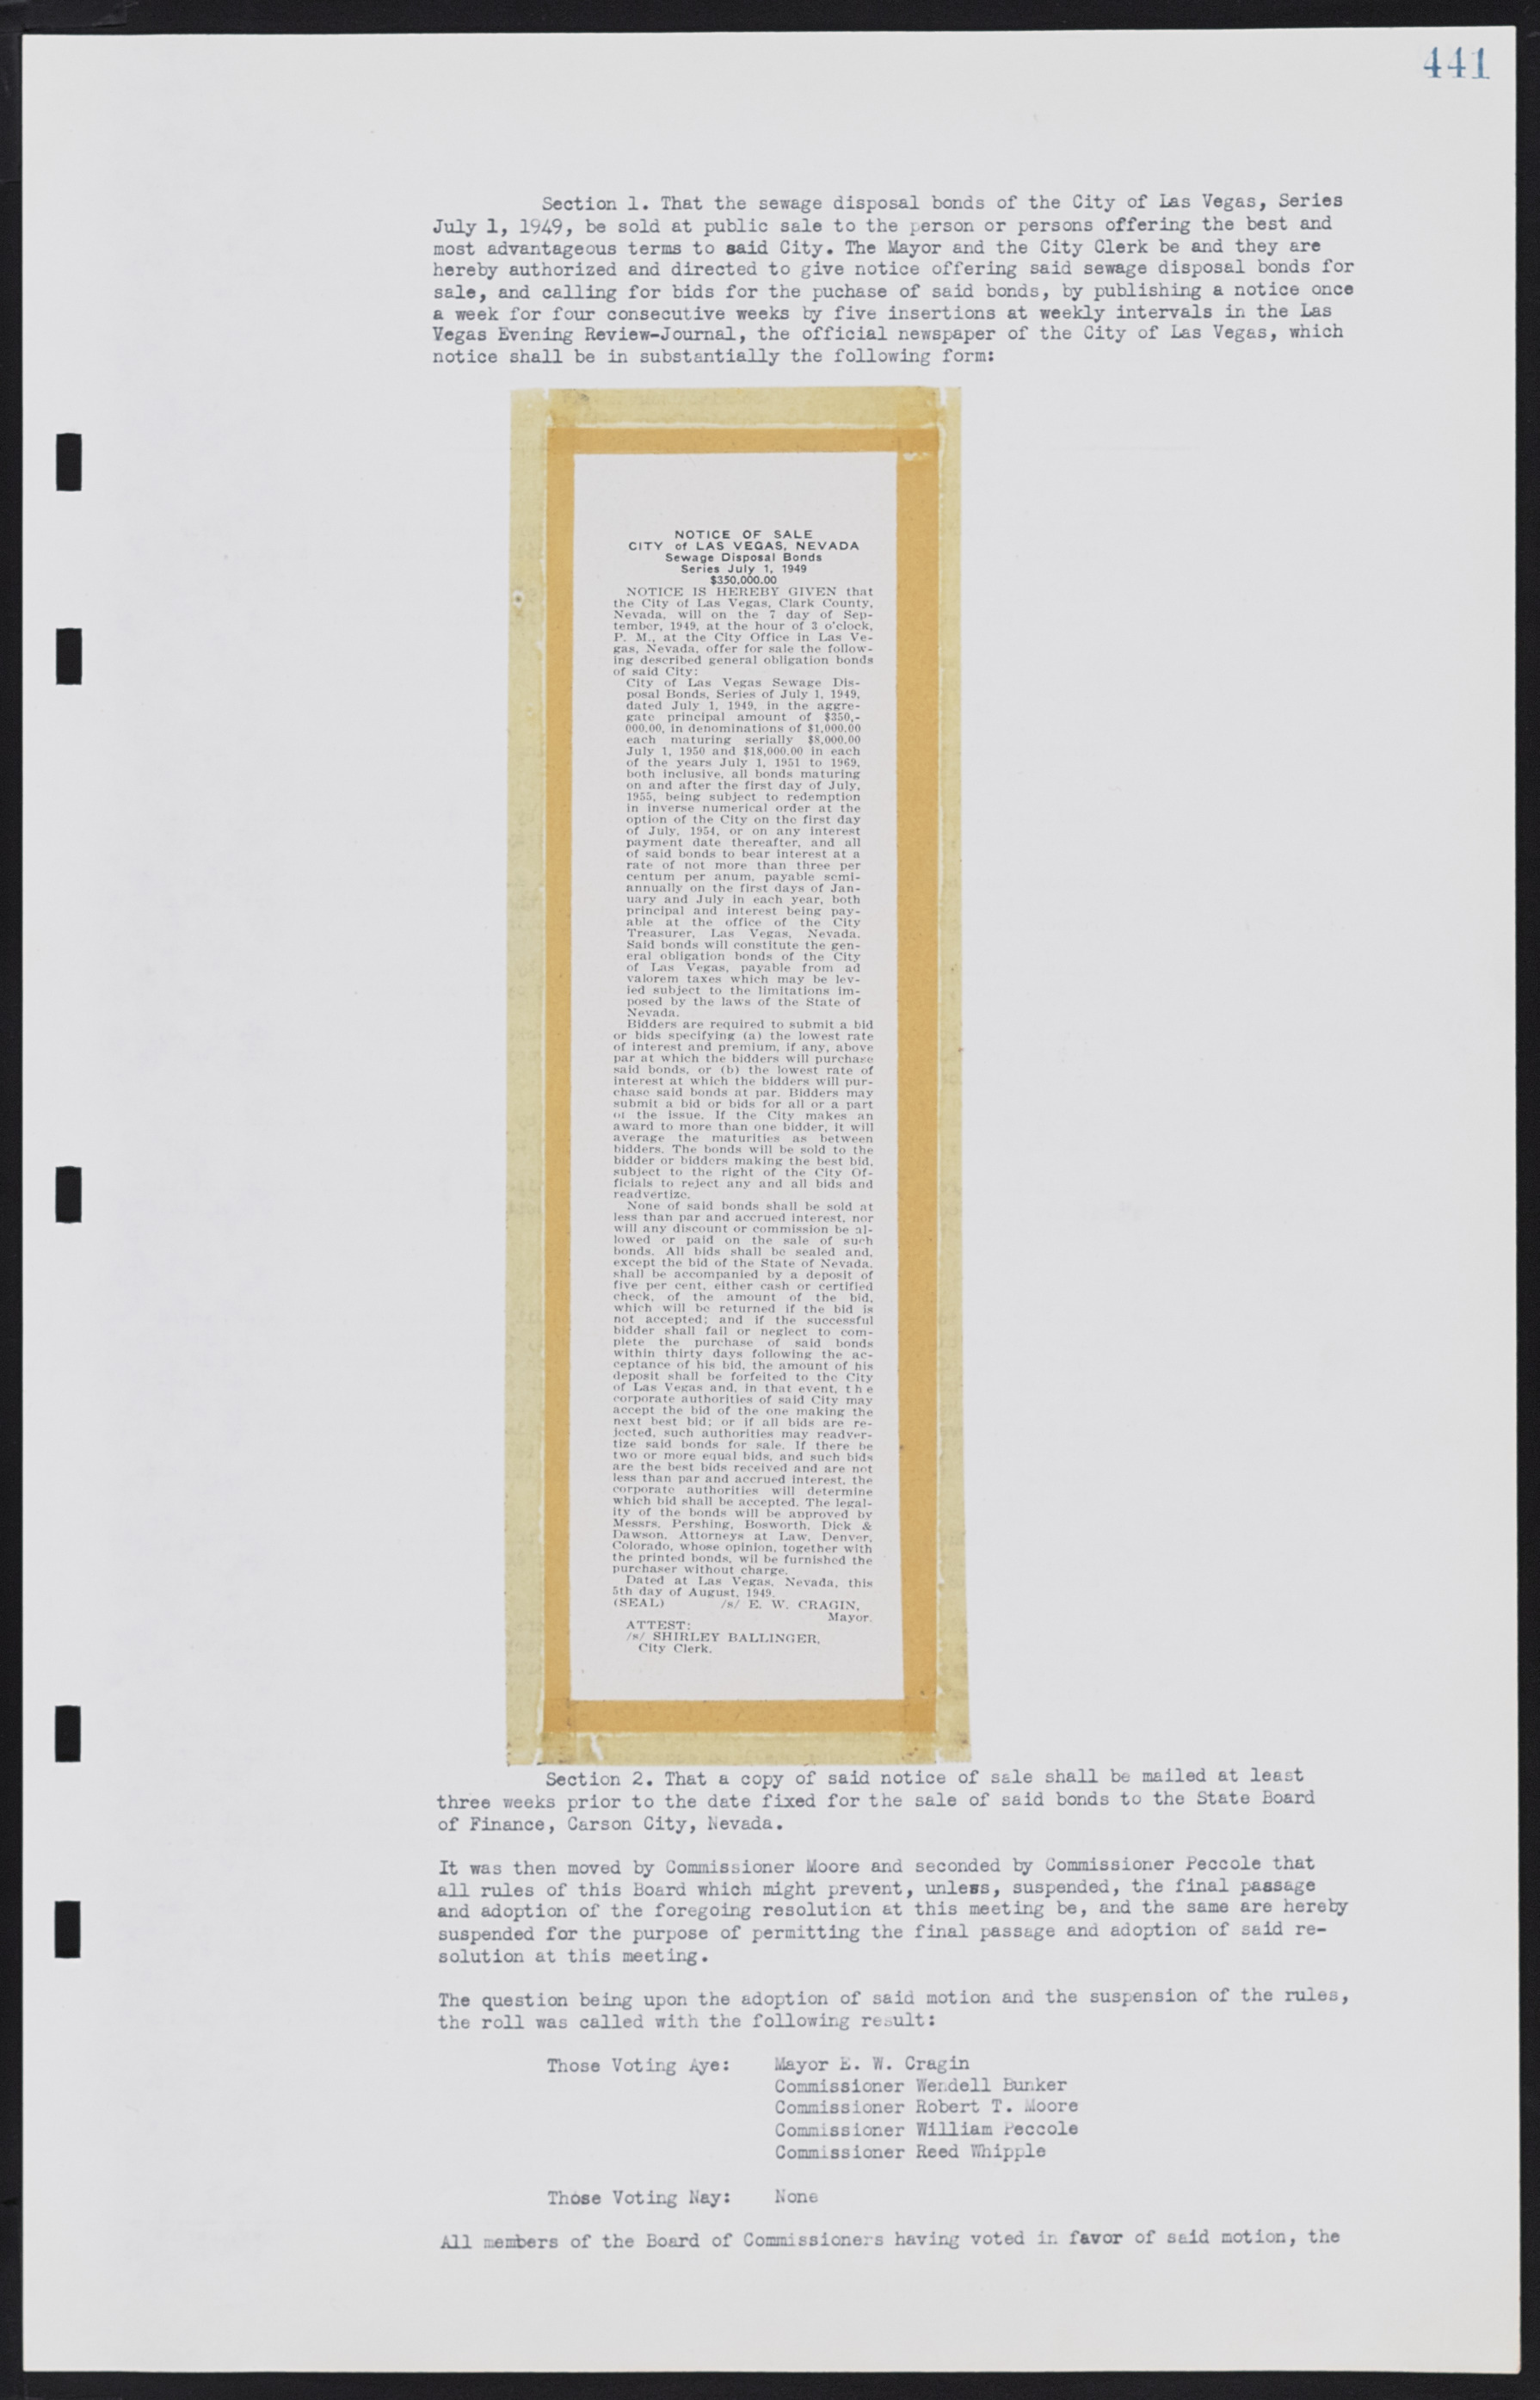 Las Vegas City Commission Minutes, January 7, 1947 to October 26, 1949, lvc000006-473